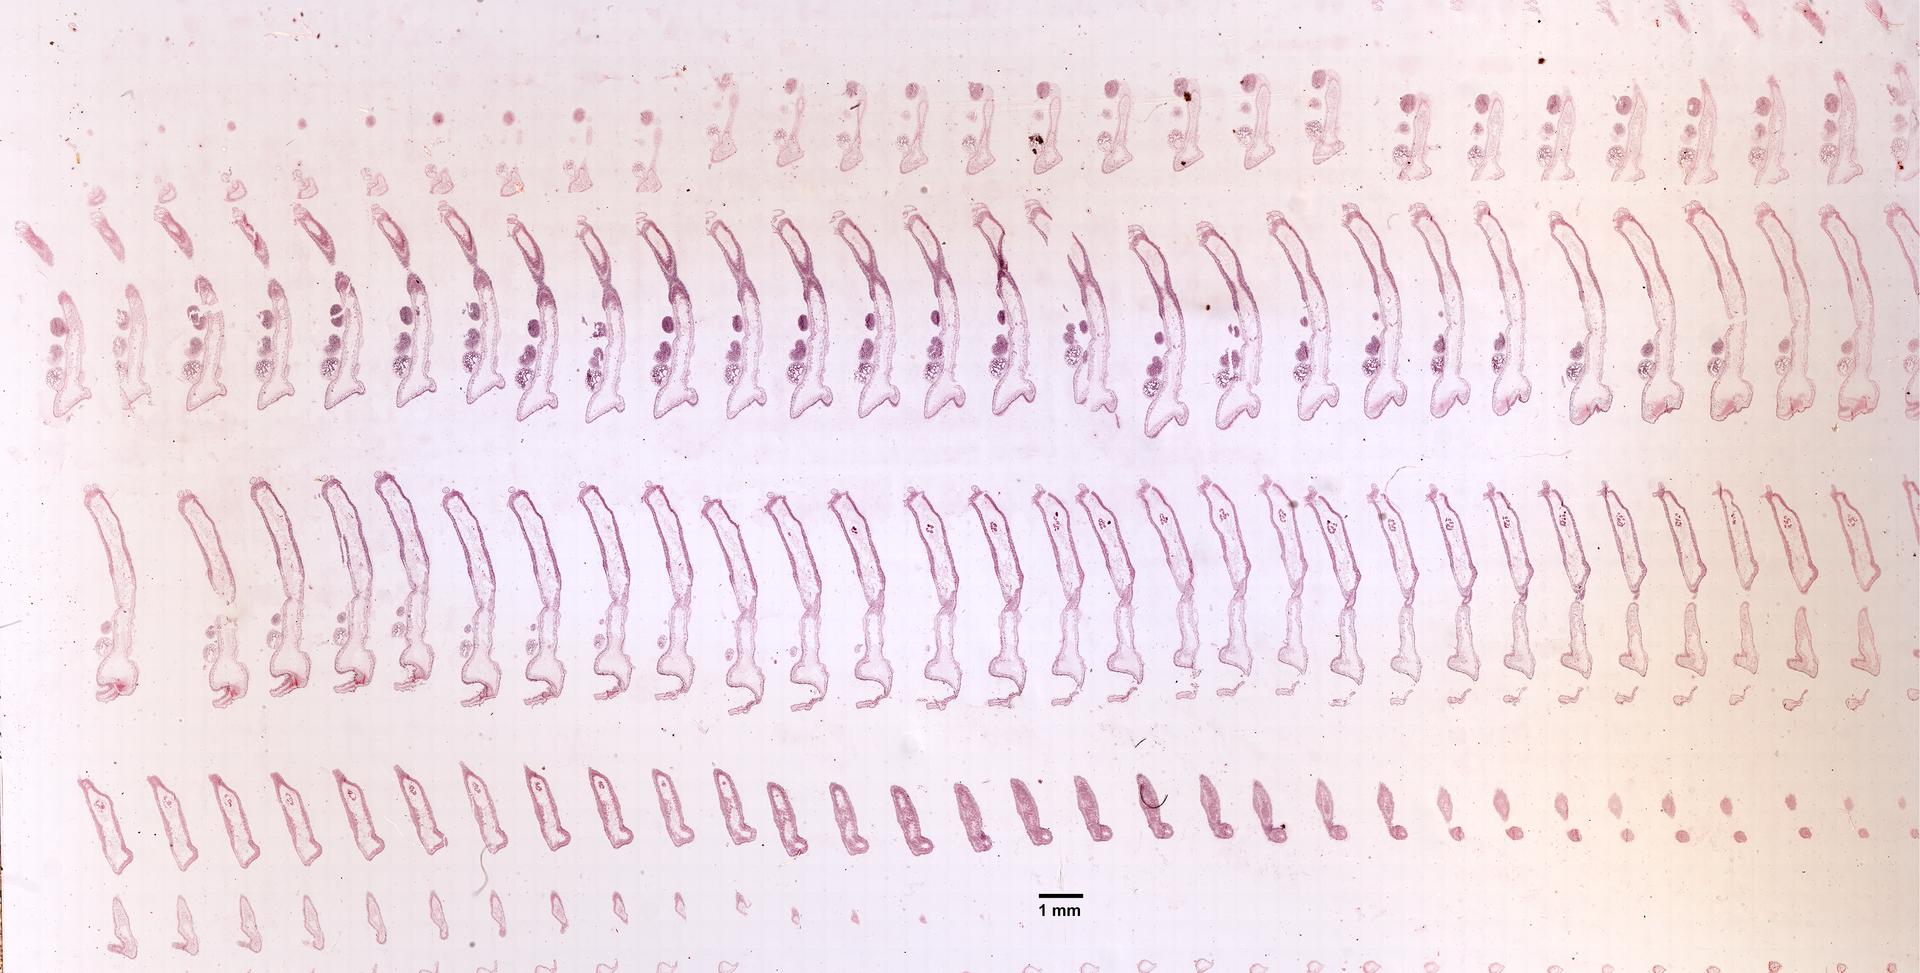 Hydra oligactis image